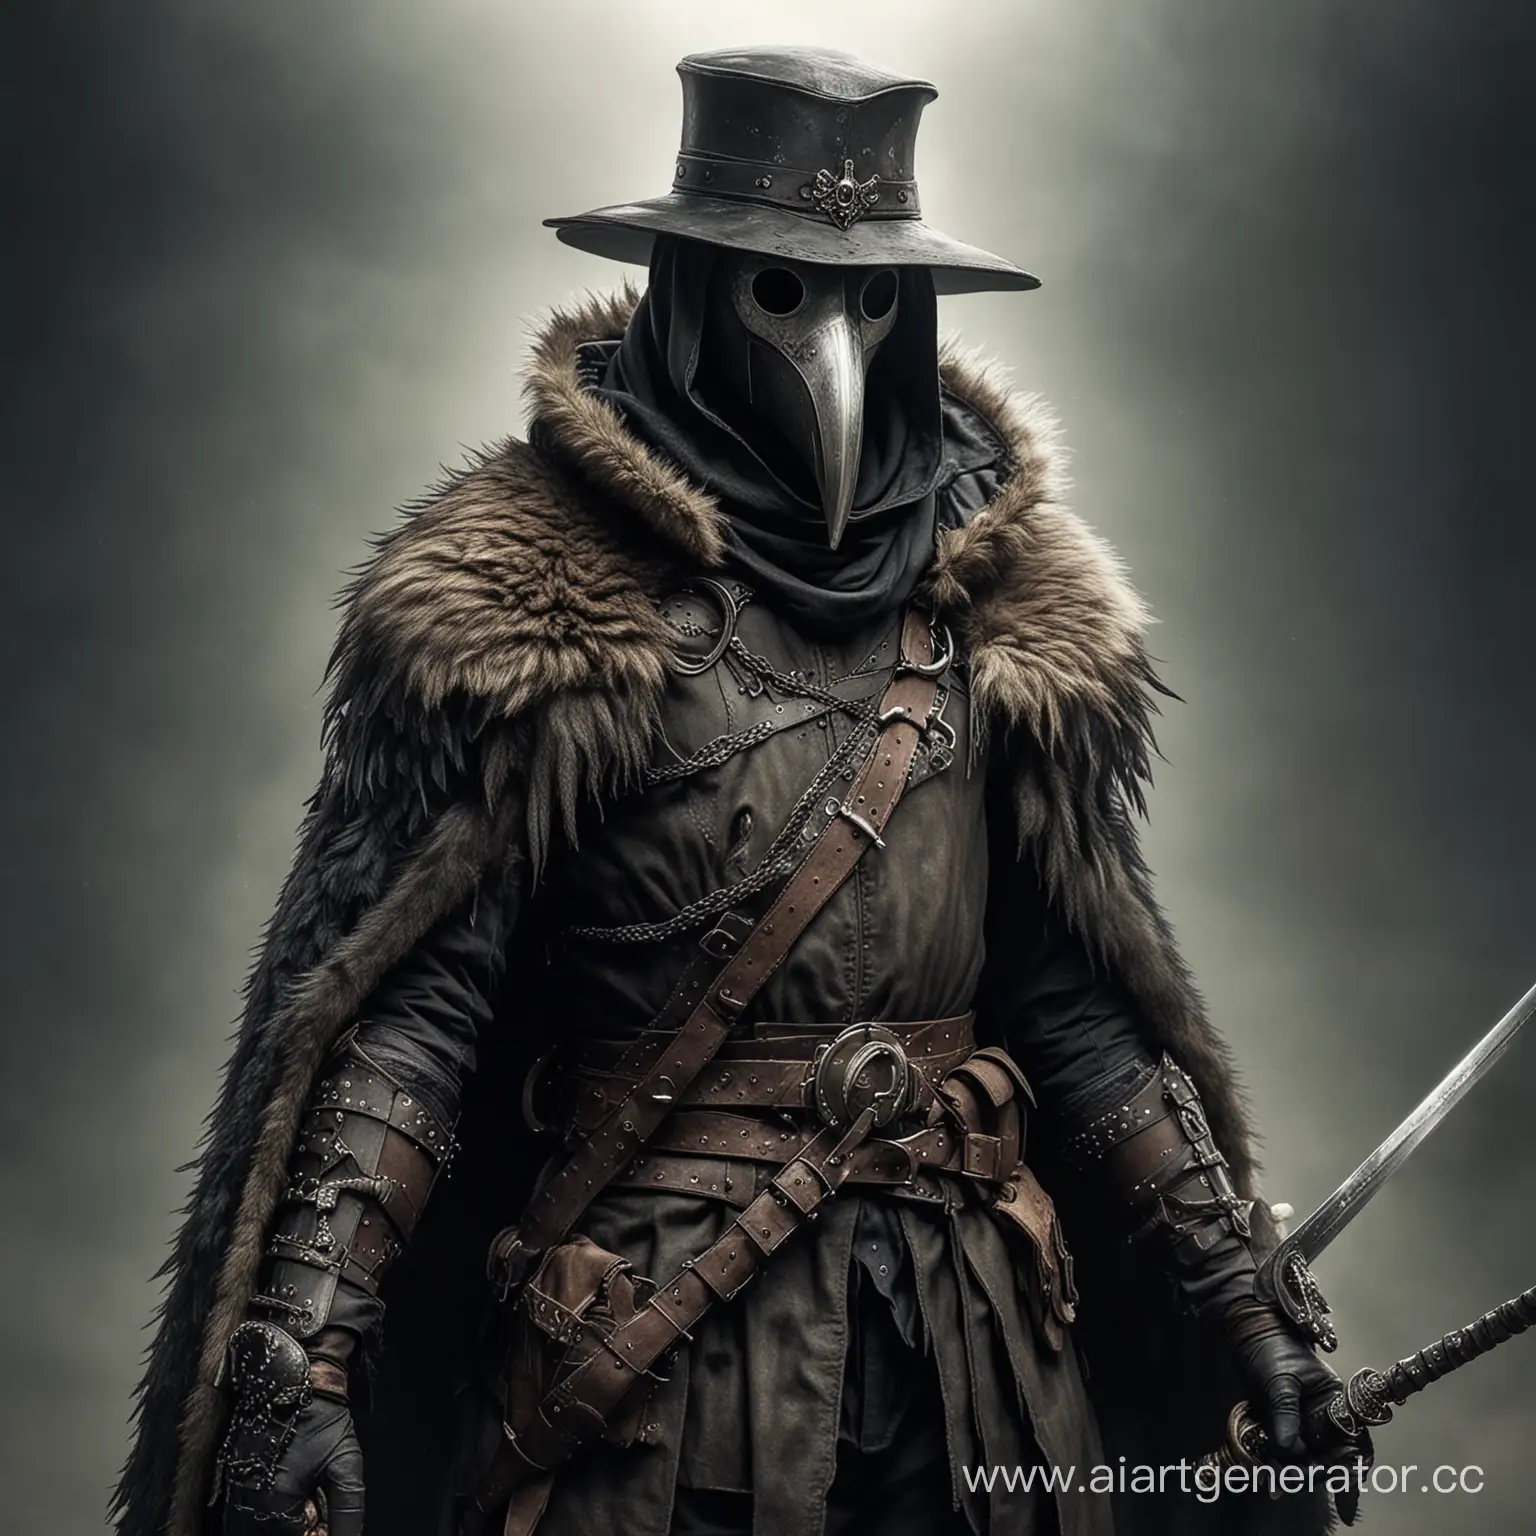 Plague-Doctor-in-Fur-Armor-with-Sword